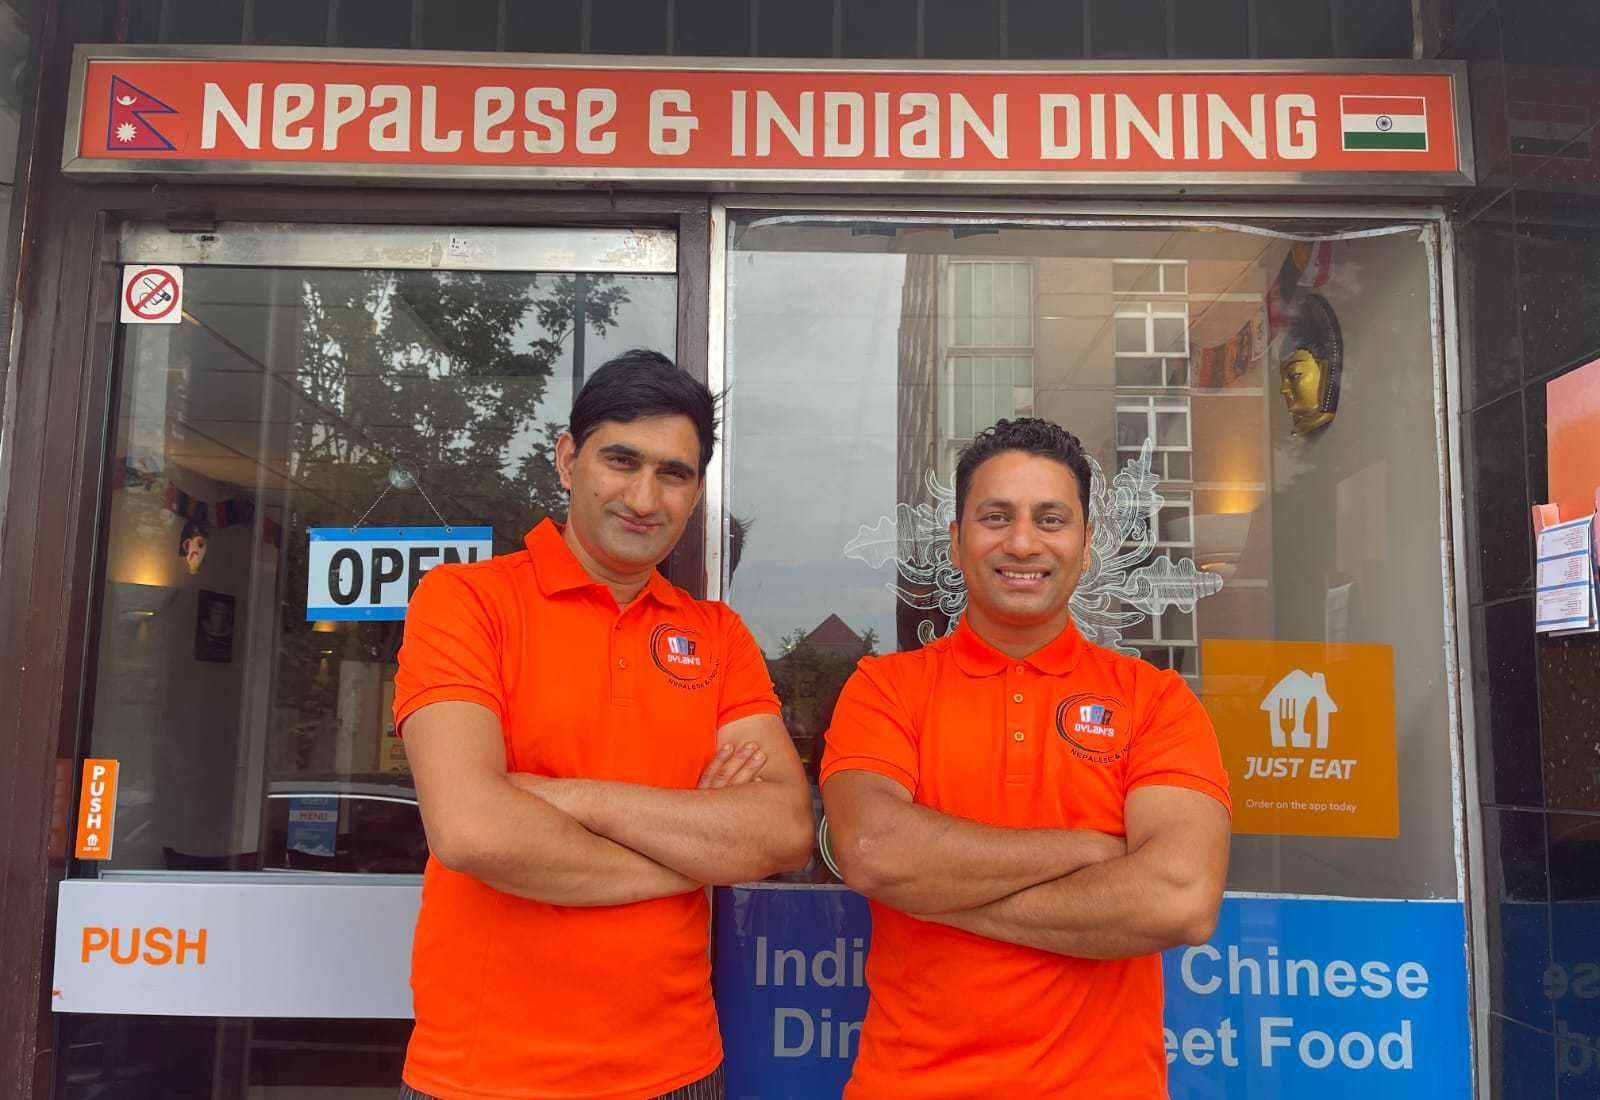 From left: Nepalese chefs Raju Kandel and Keshav Kandel